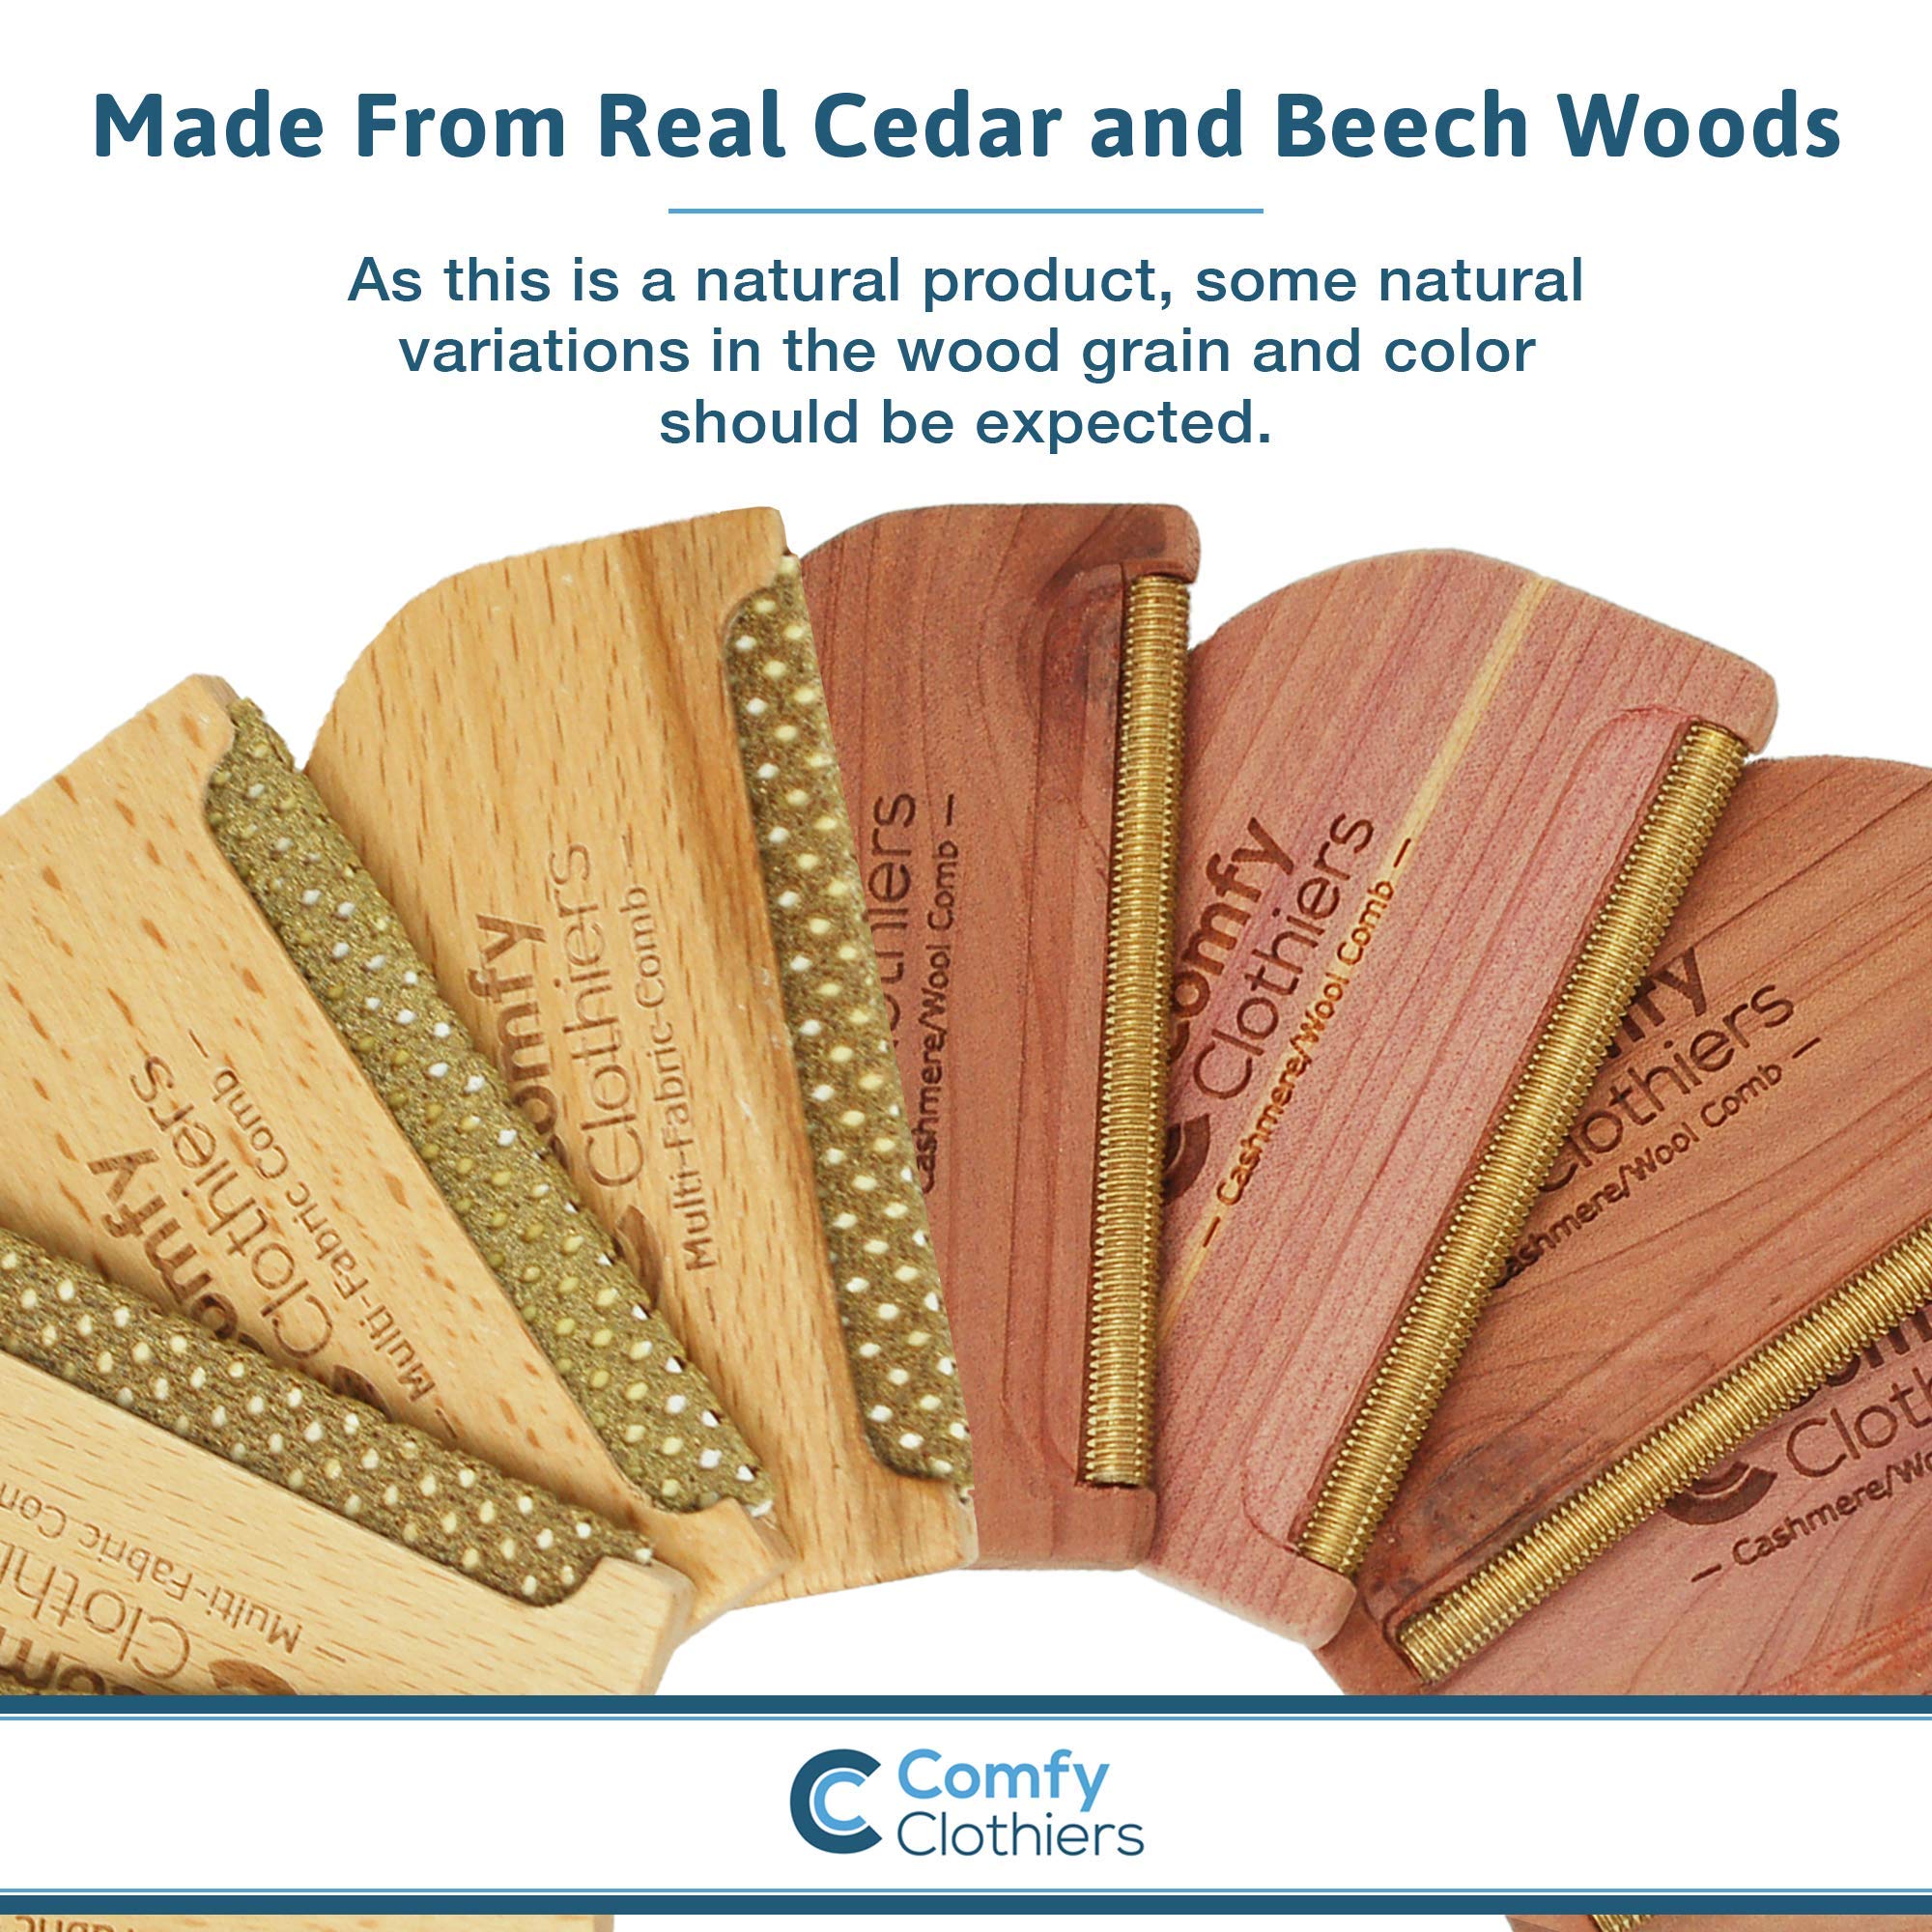 Cedar Wood Cashmere Comb & Beech Wood Sweater Shaver Comb Combo Pack 